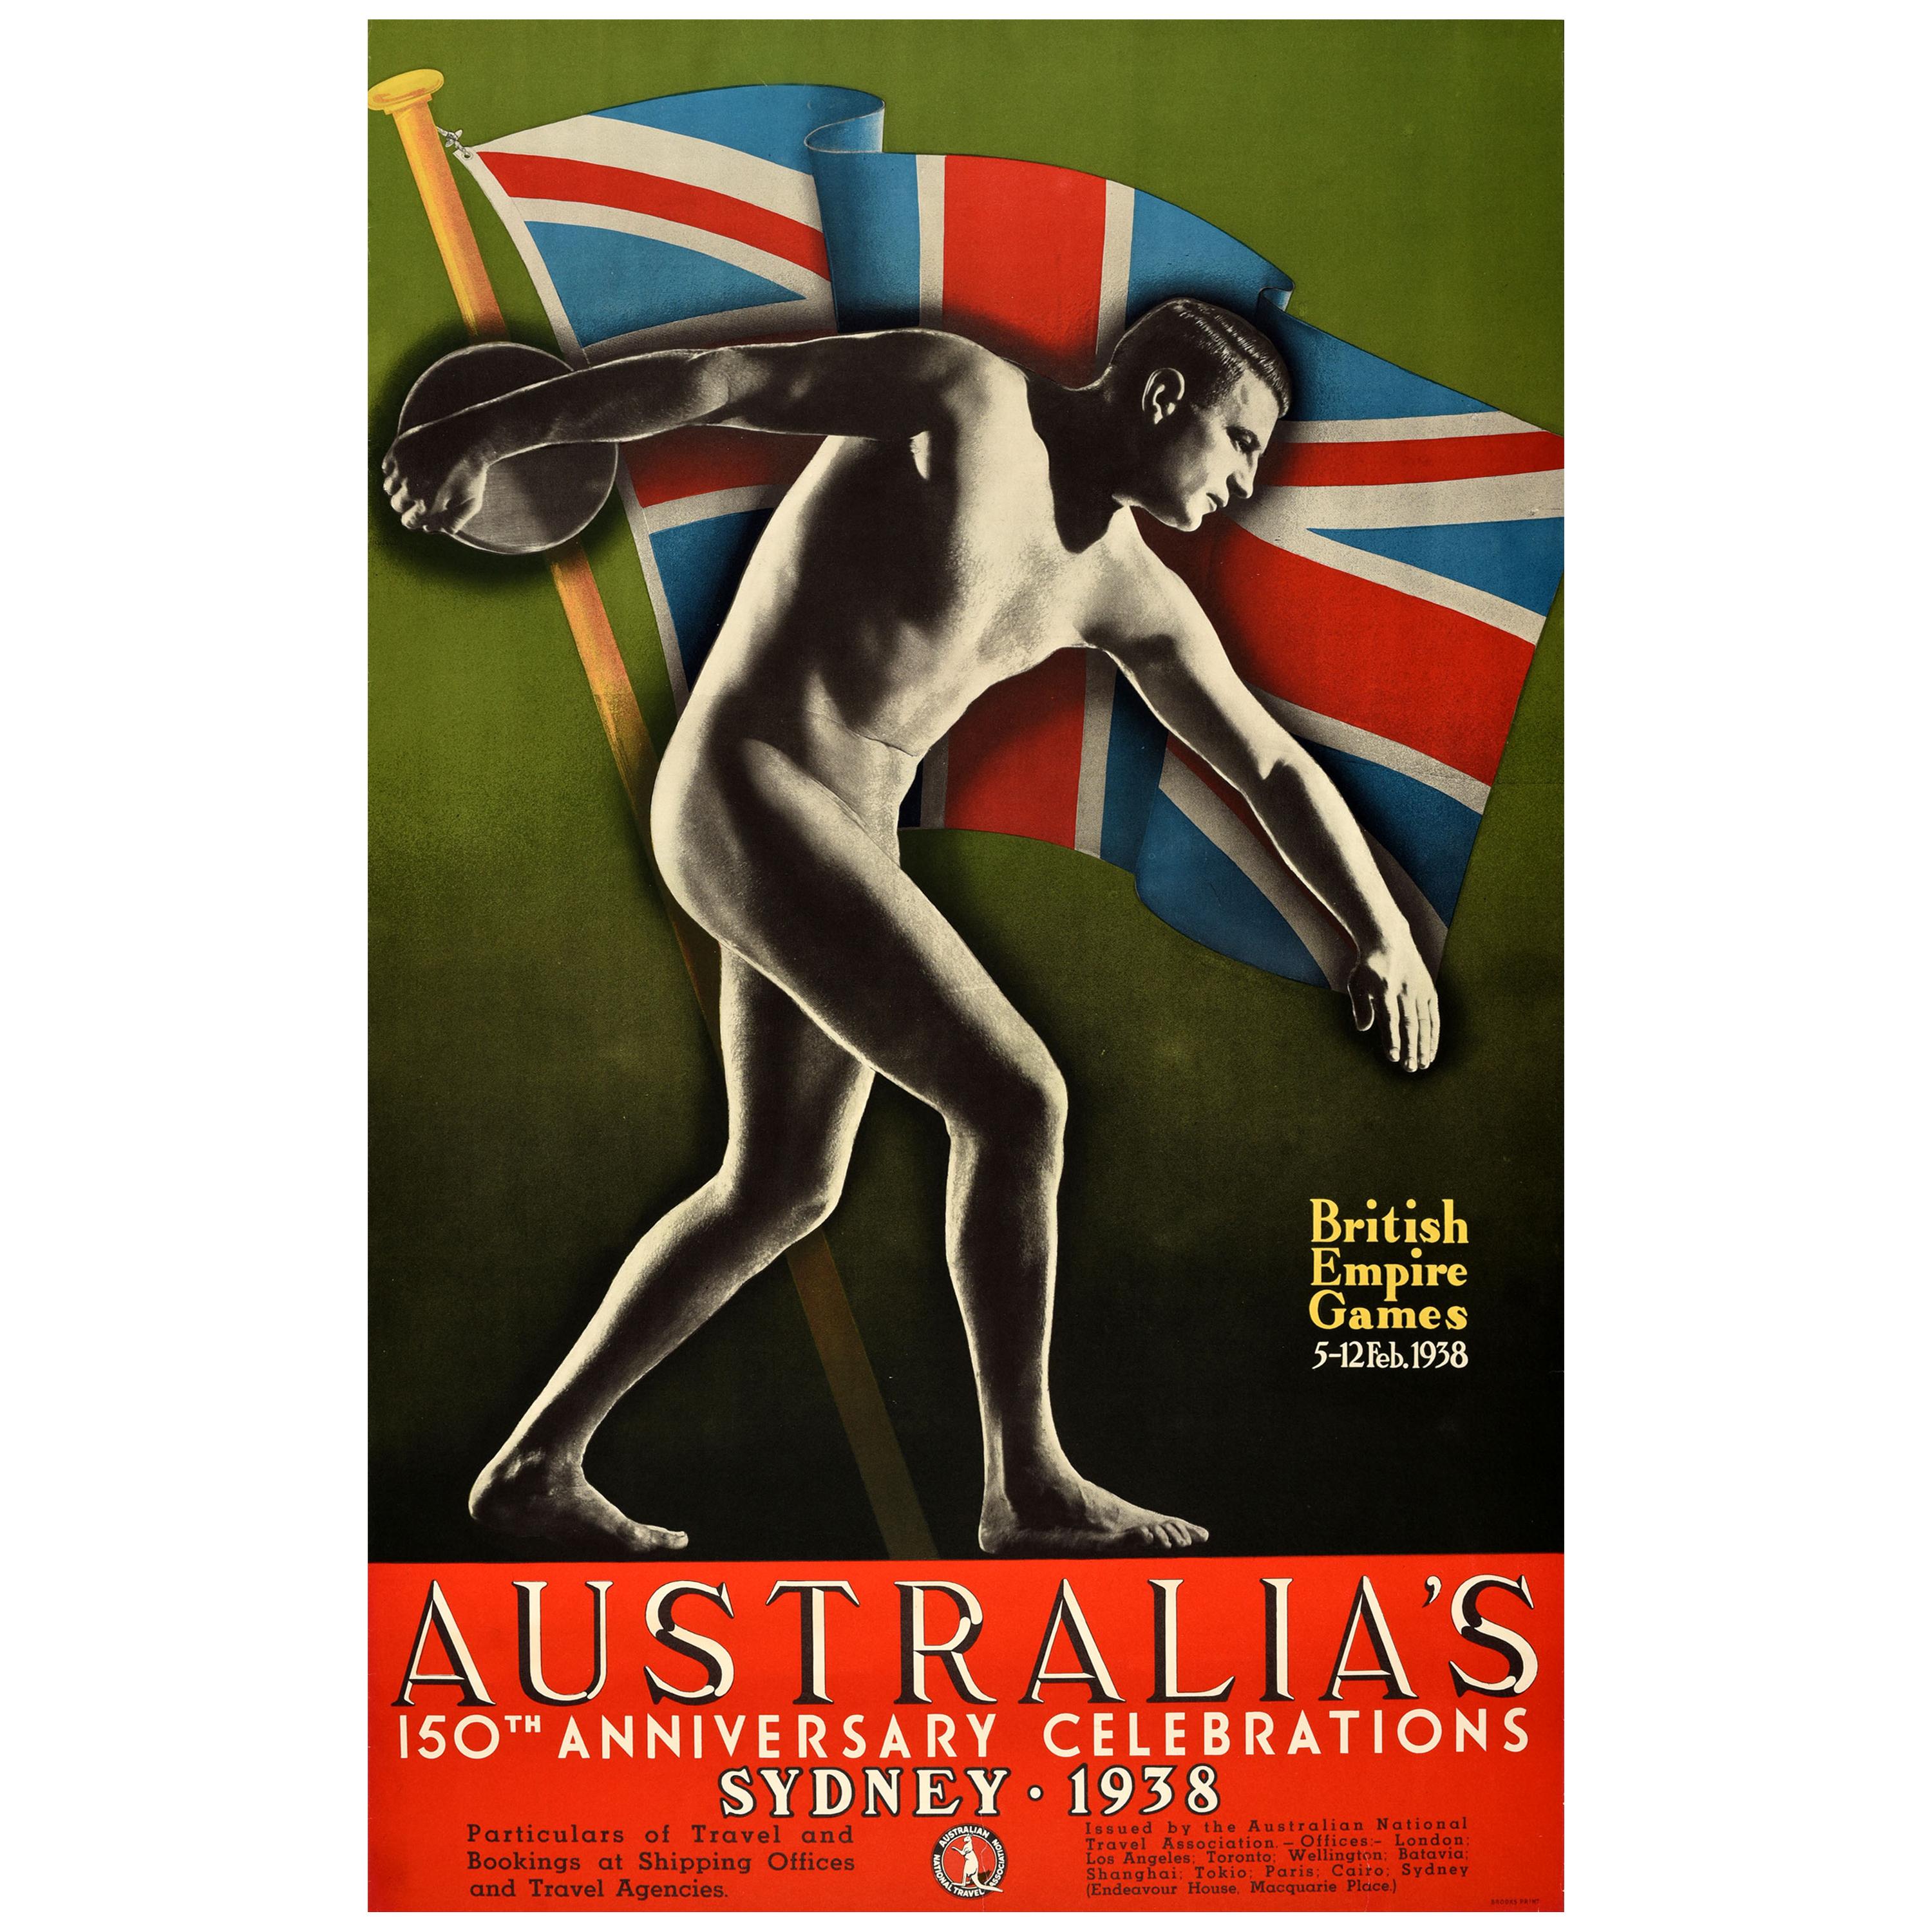 Original Vintage 1938 British Empire Games Poster Sydney Australia Commonwealth